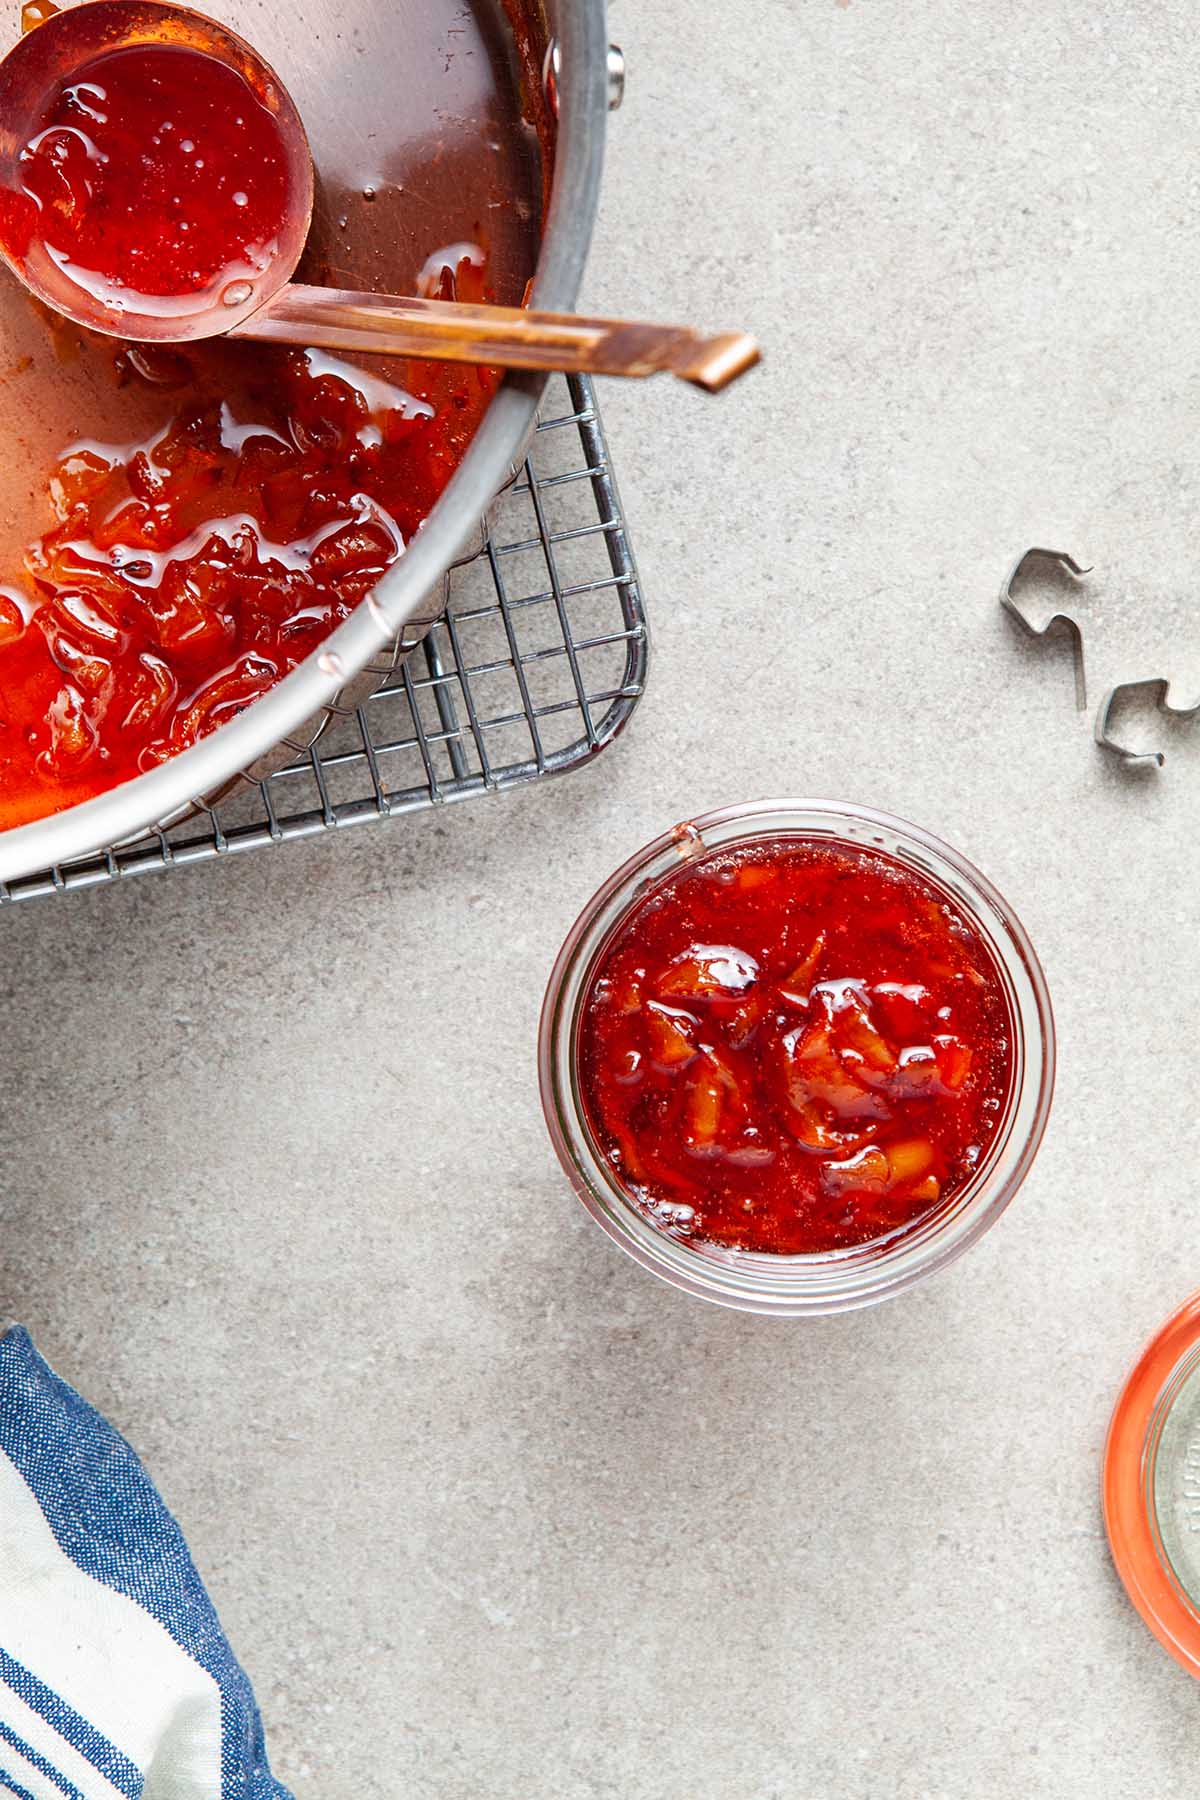 A jar of maple peach whisky jam next to a pot of jam.